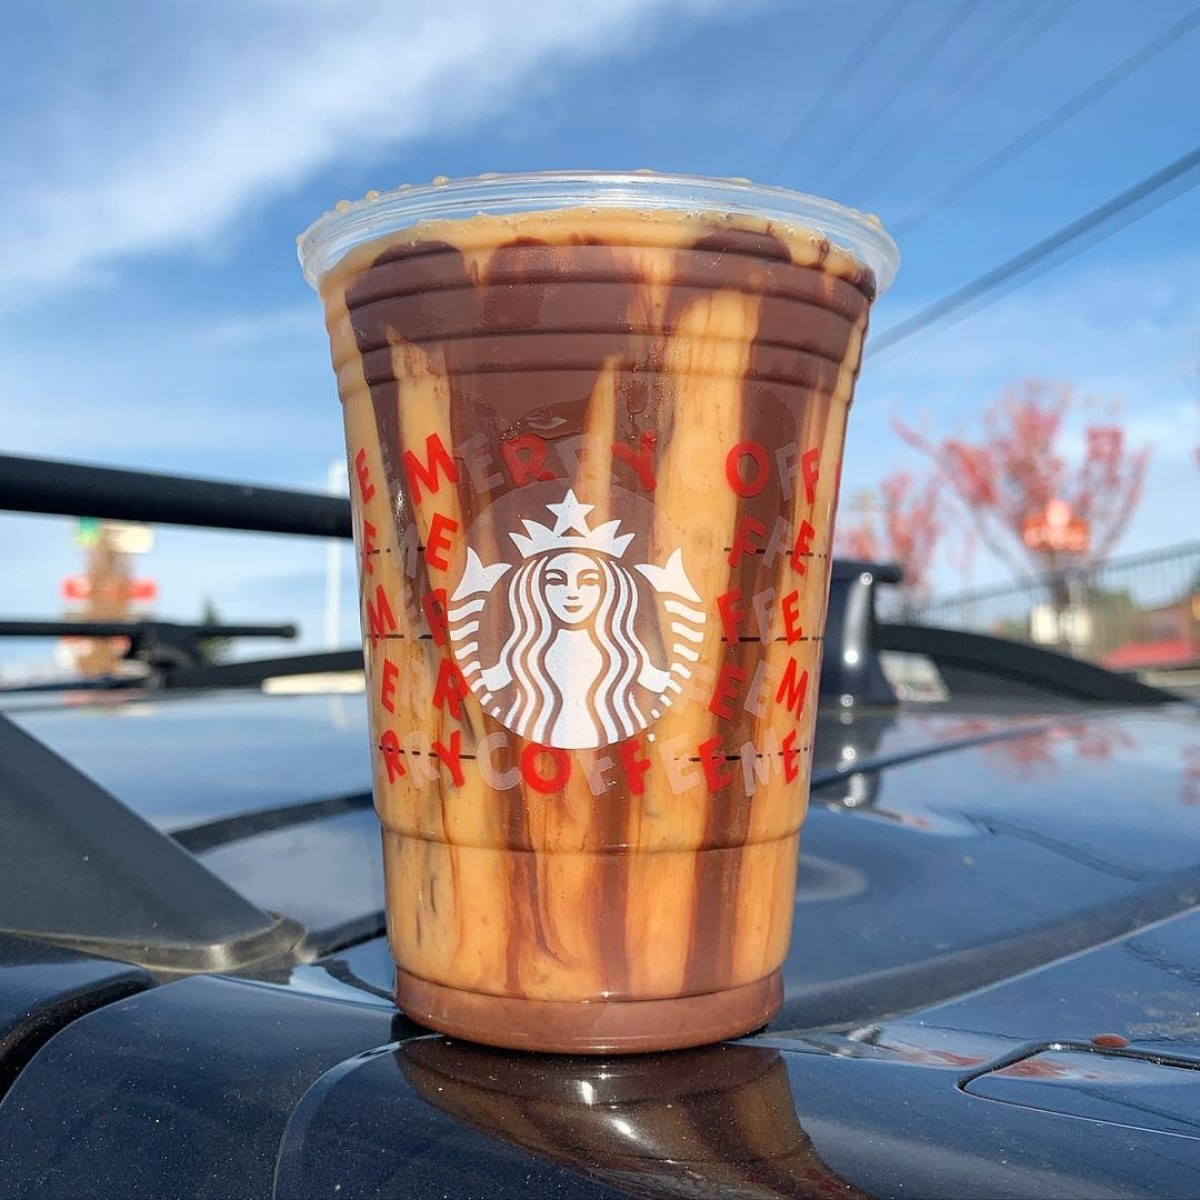 cup of starbucks iced peppermint mocha on car dashboard